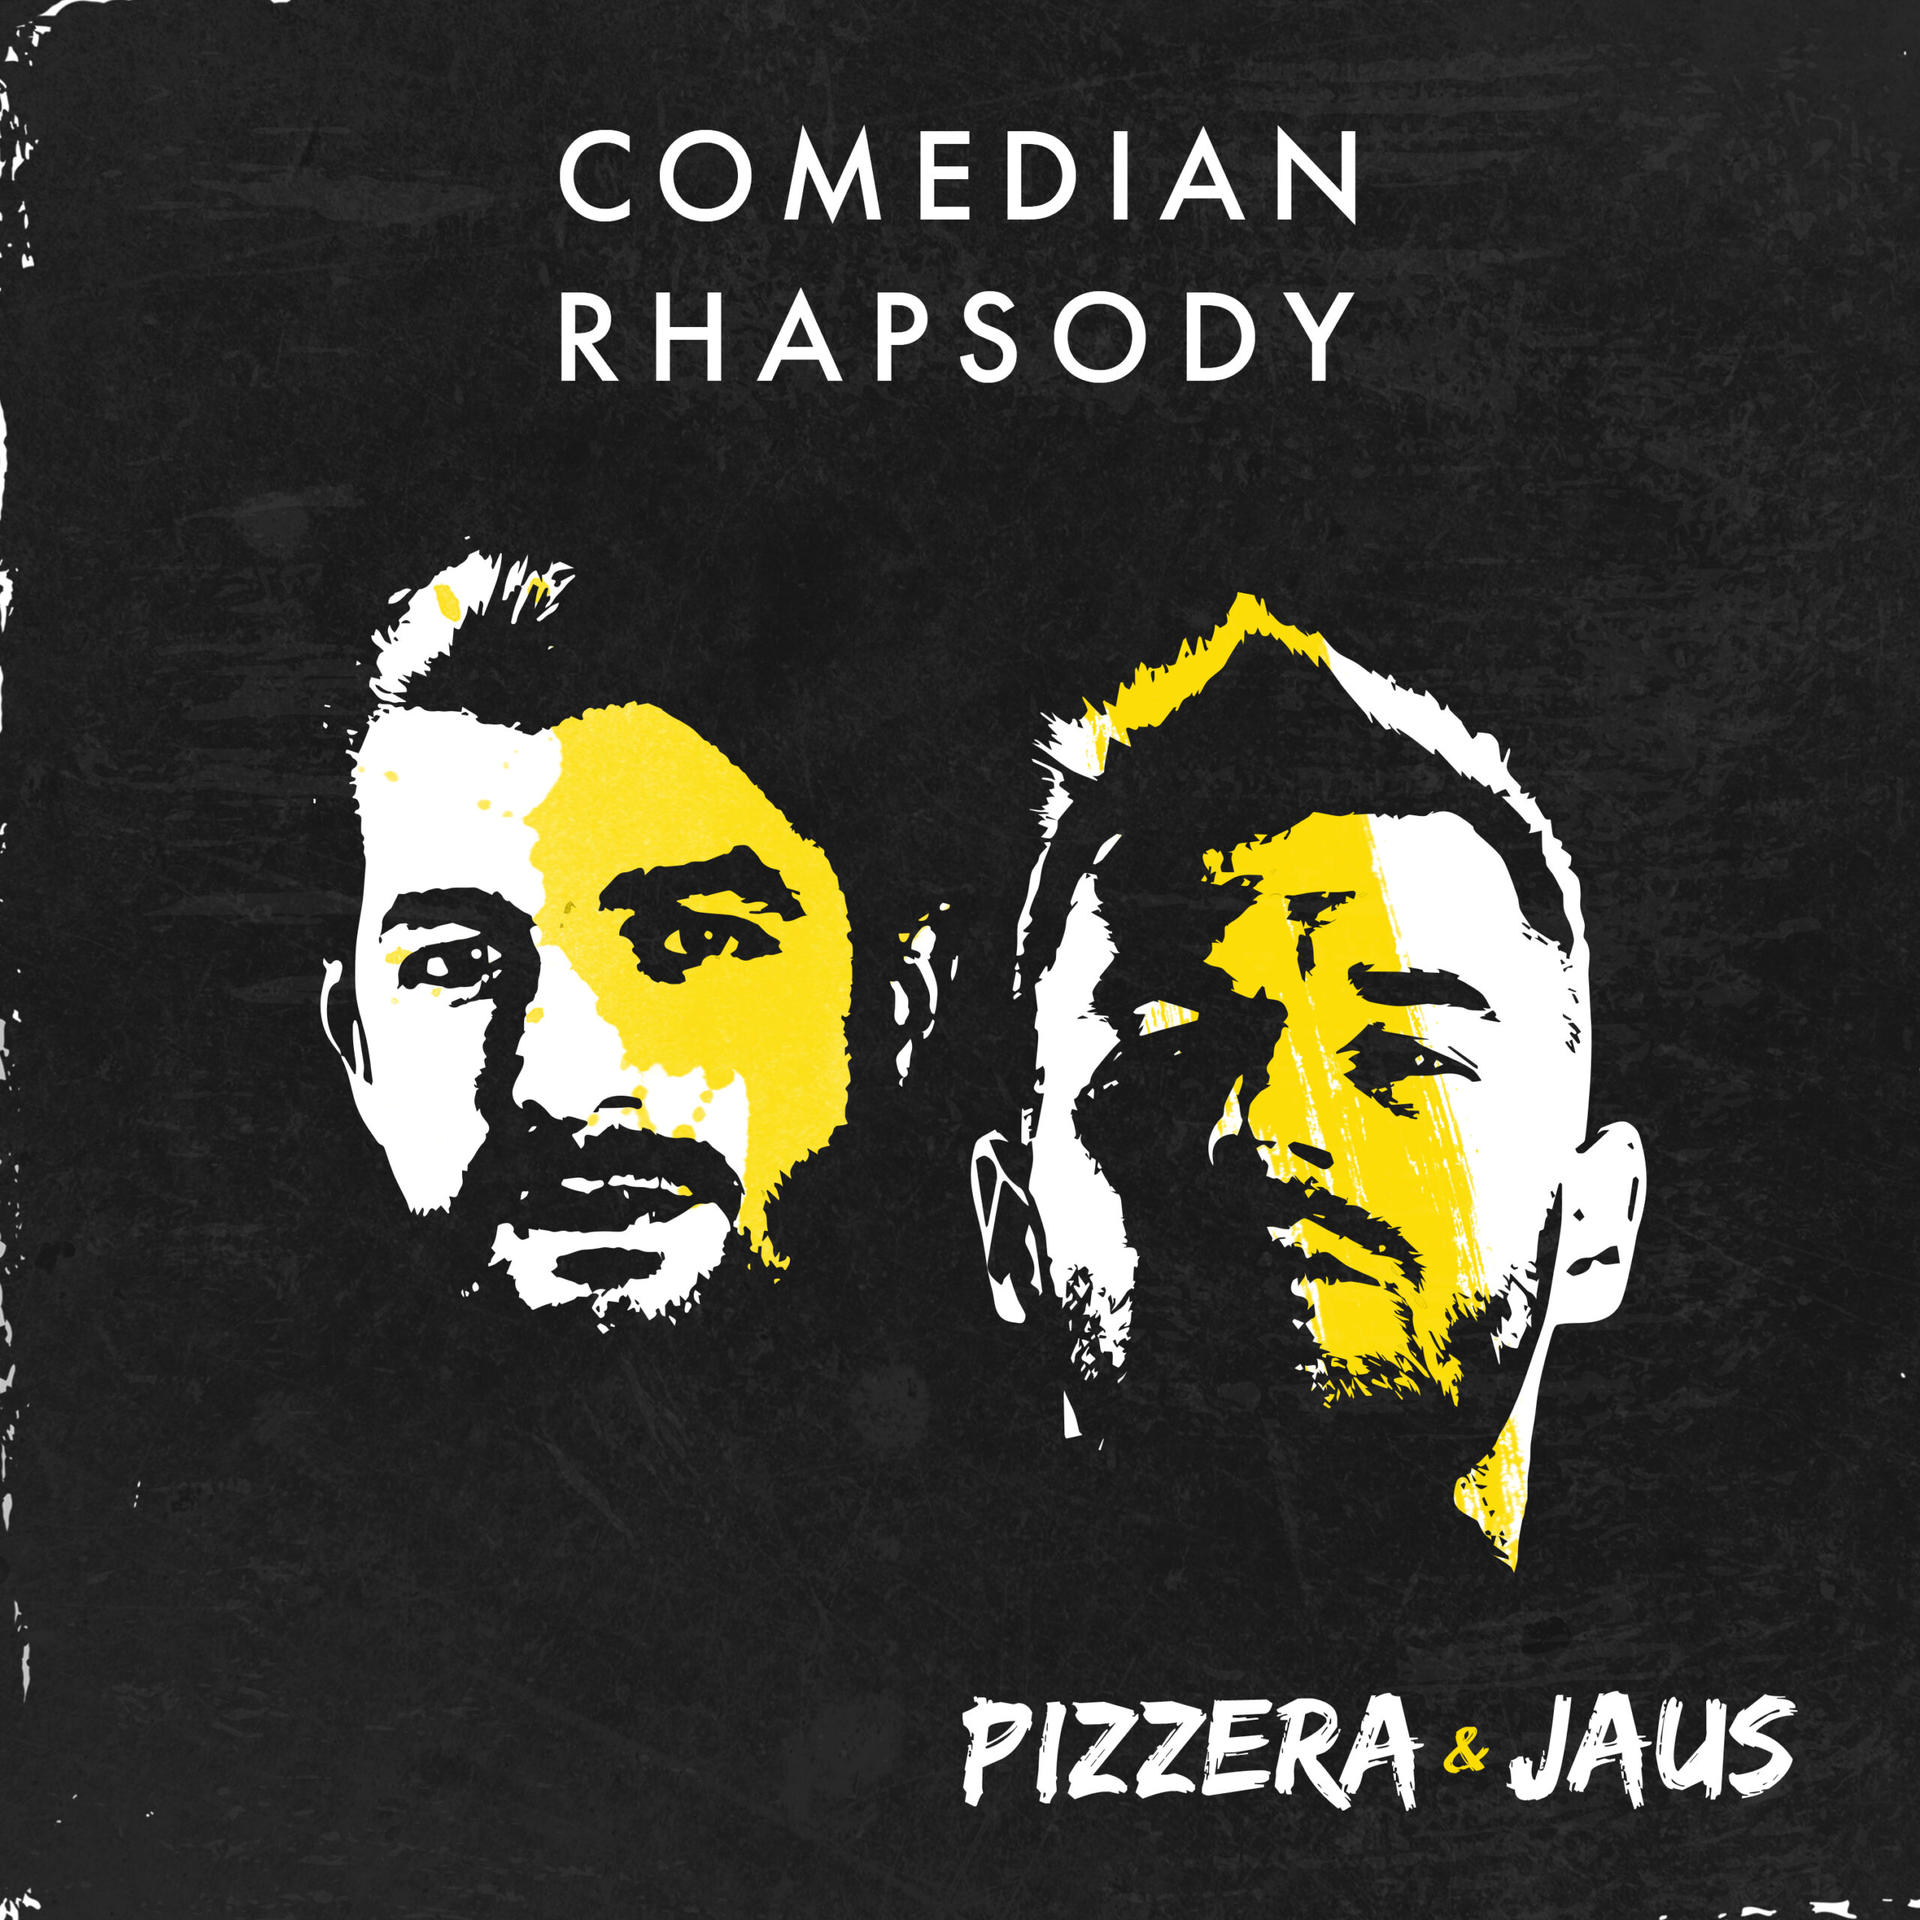 Pizzera & Jaus - Comedian (CD) - Rhapsody